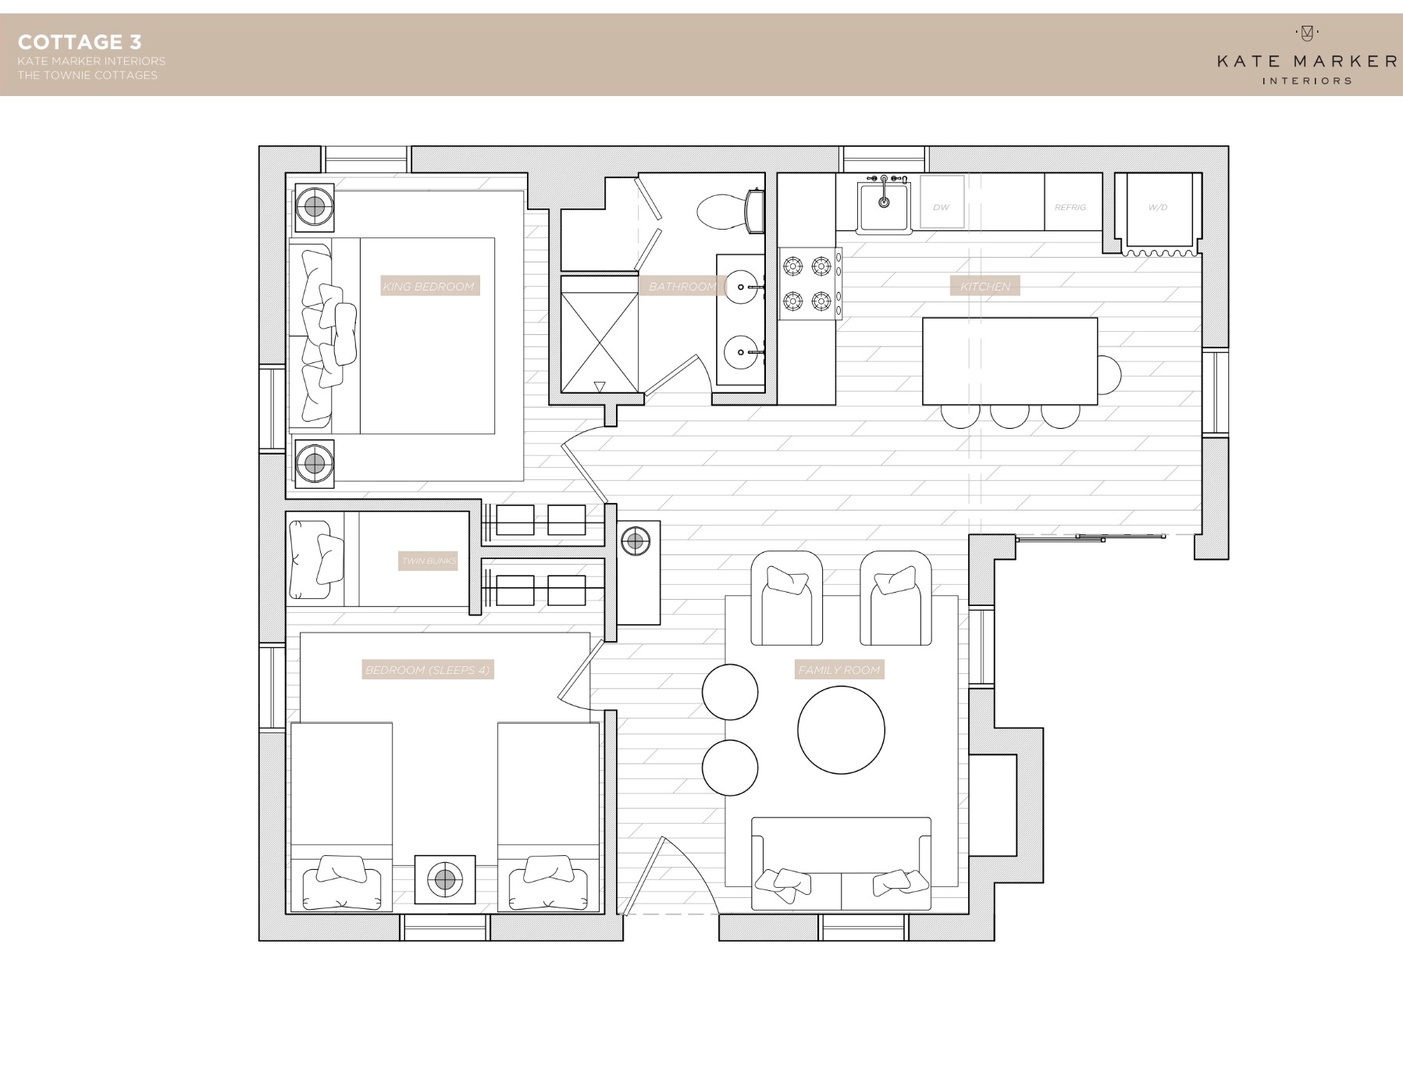 Townie Floor Plan - Cottage 3